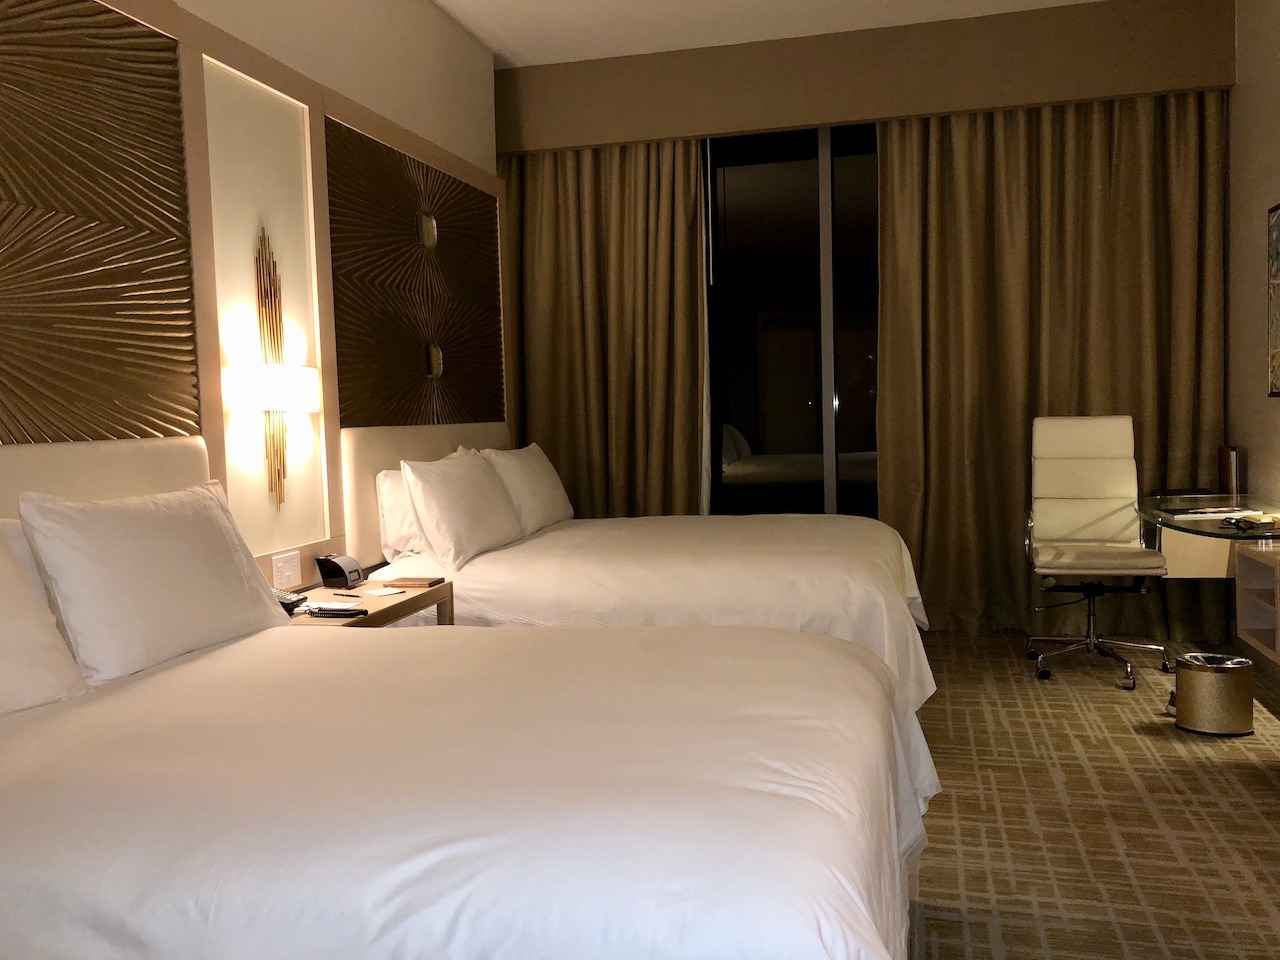 Waldorf-Astoria Panama standard room